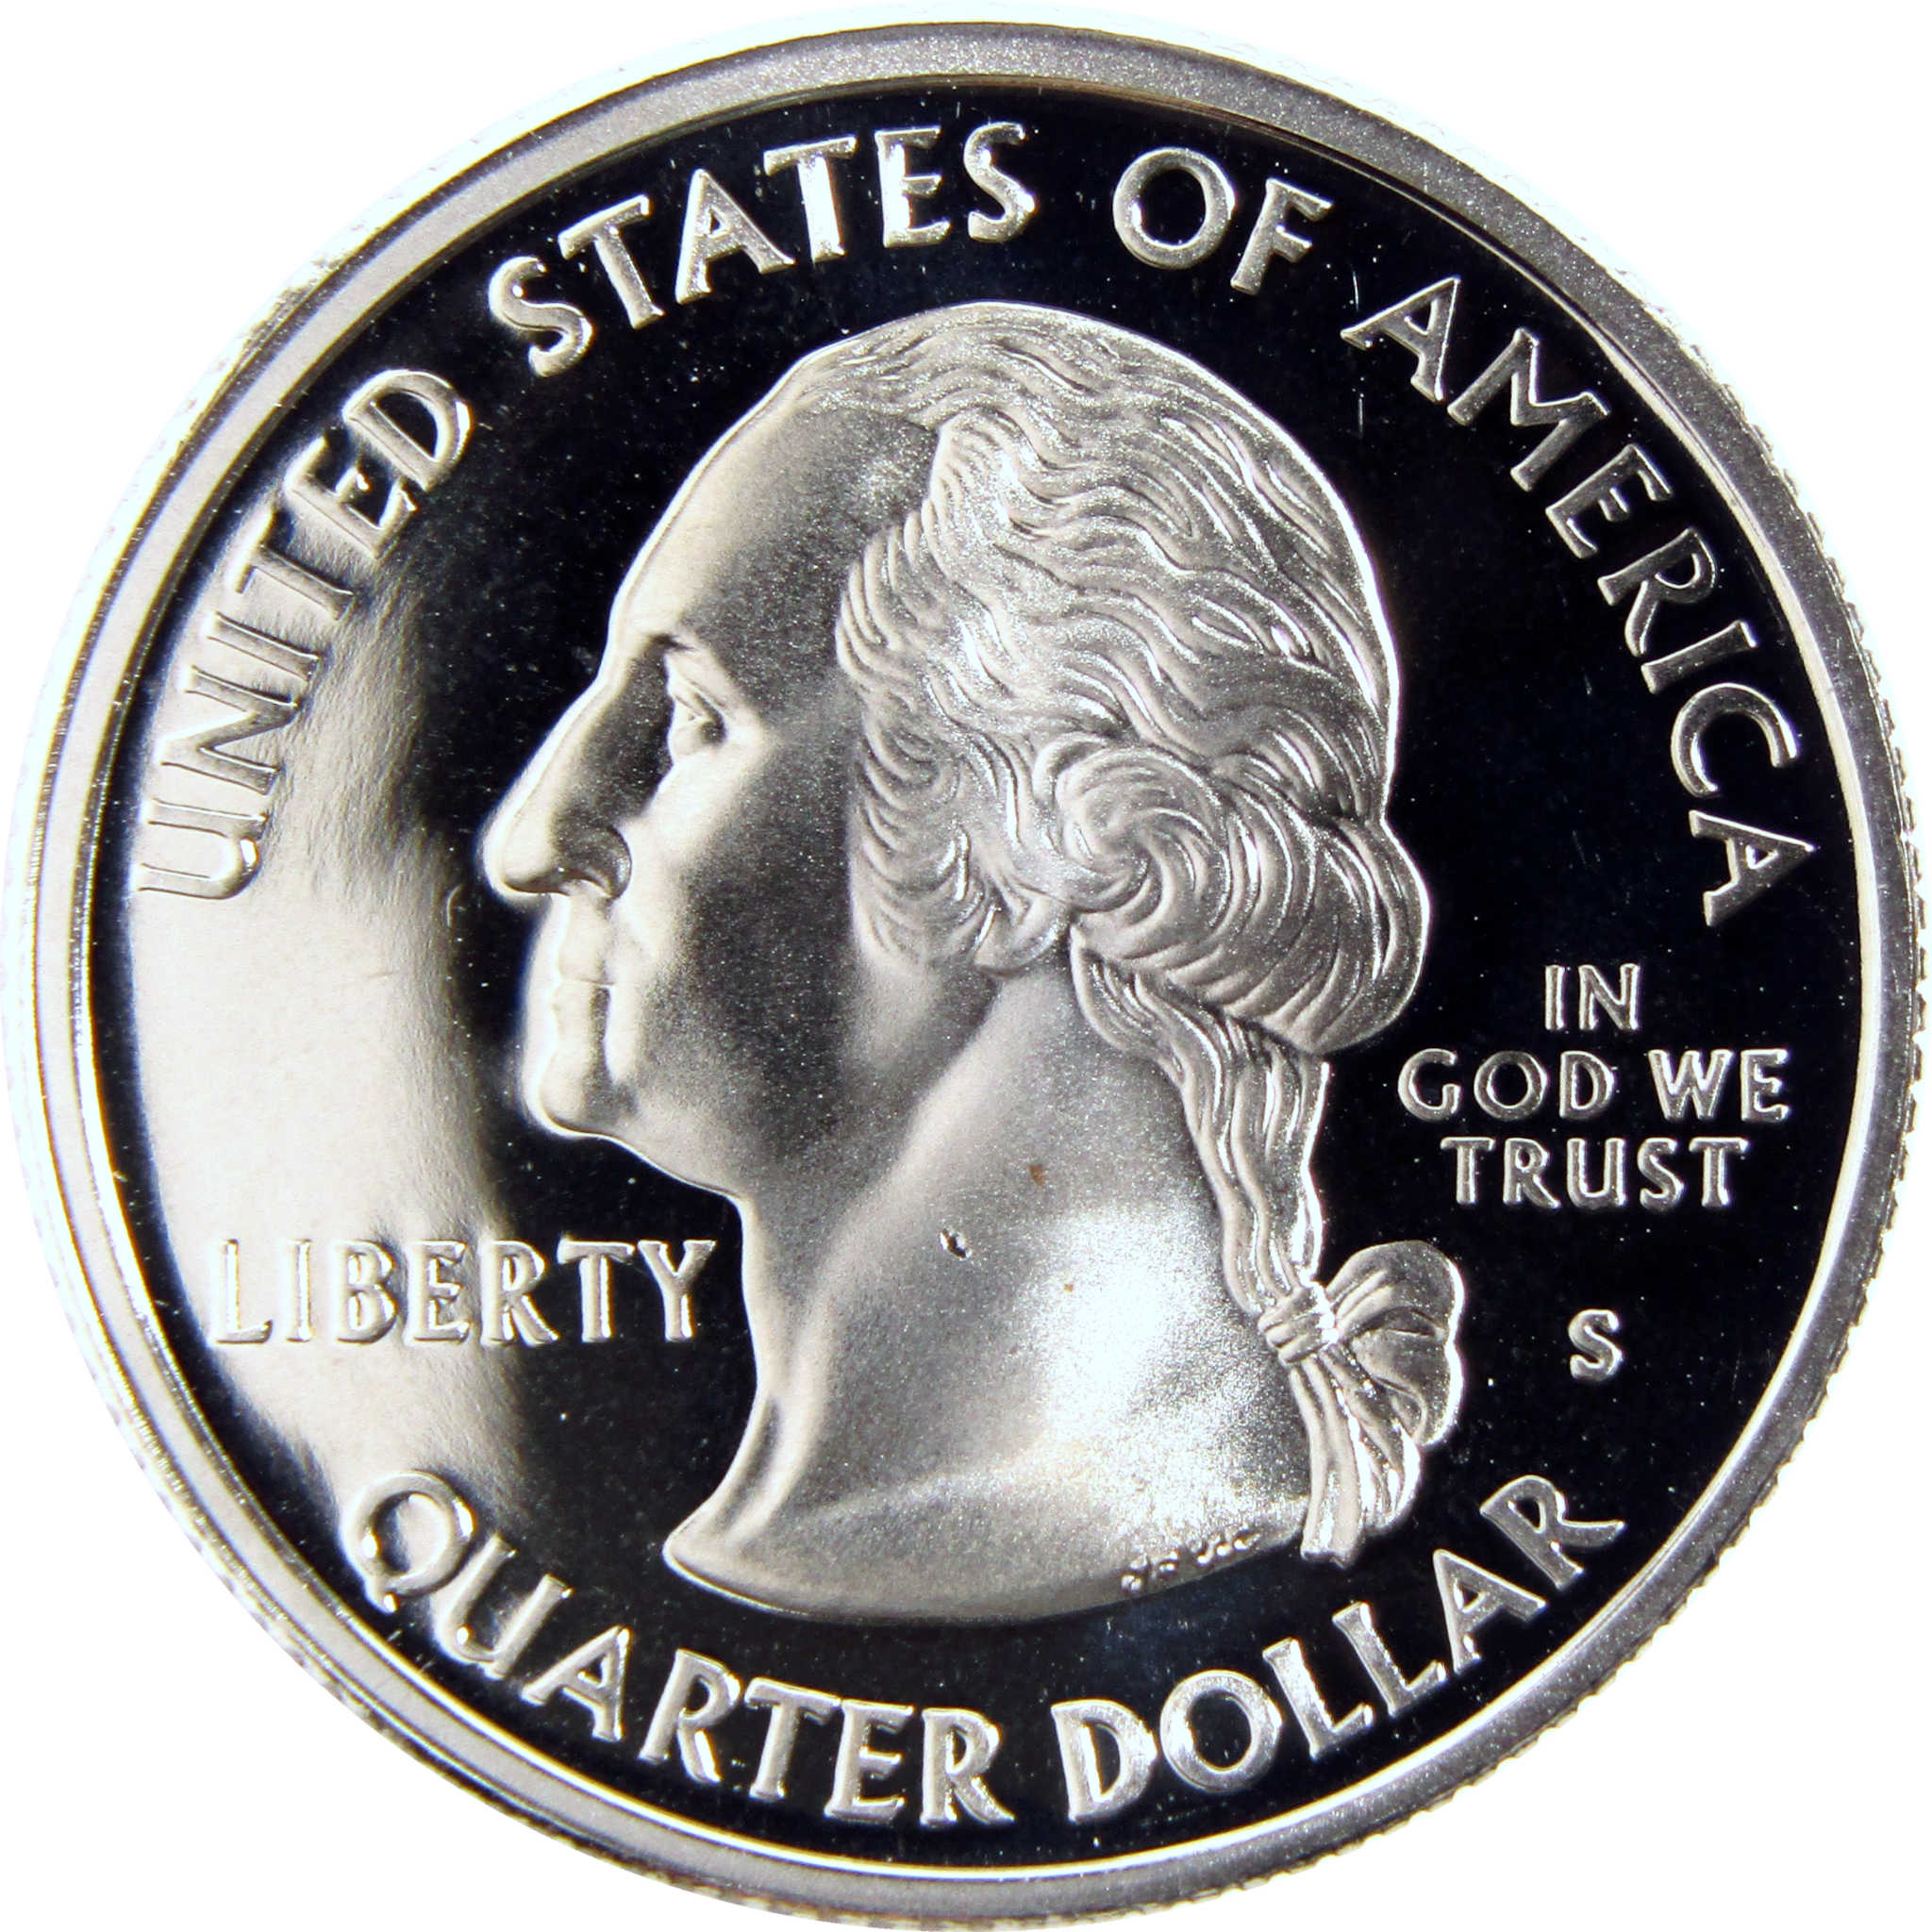 2000 S South Carolina State Quarter Clad 25c Proof Coin